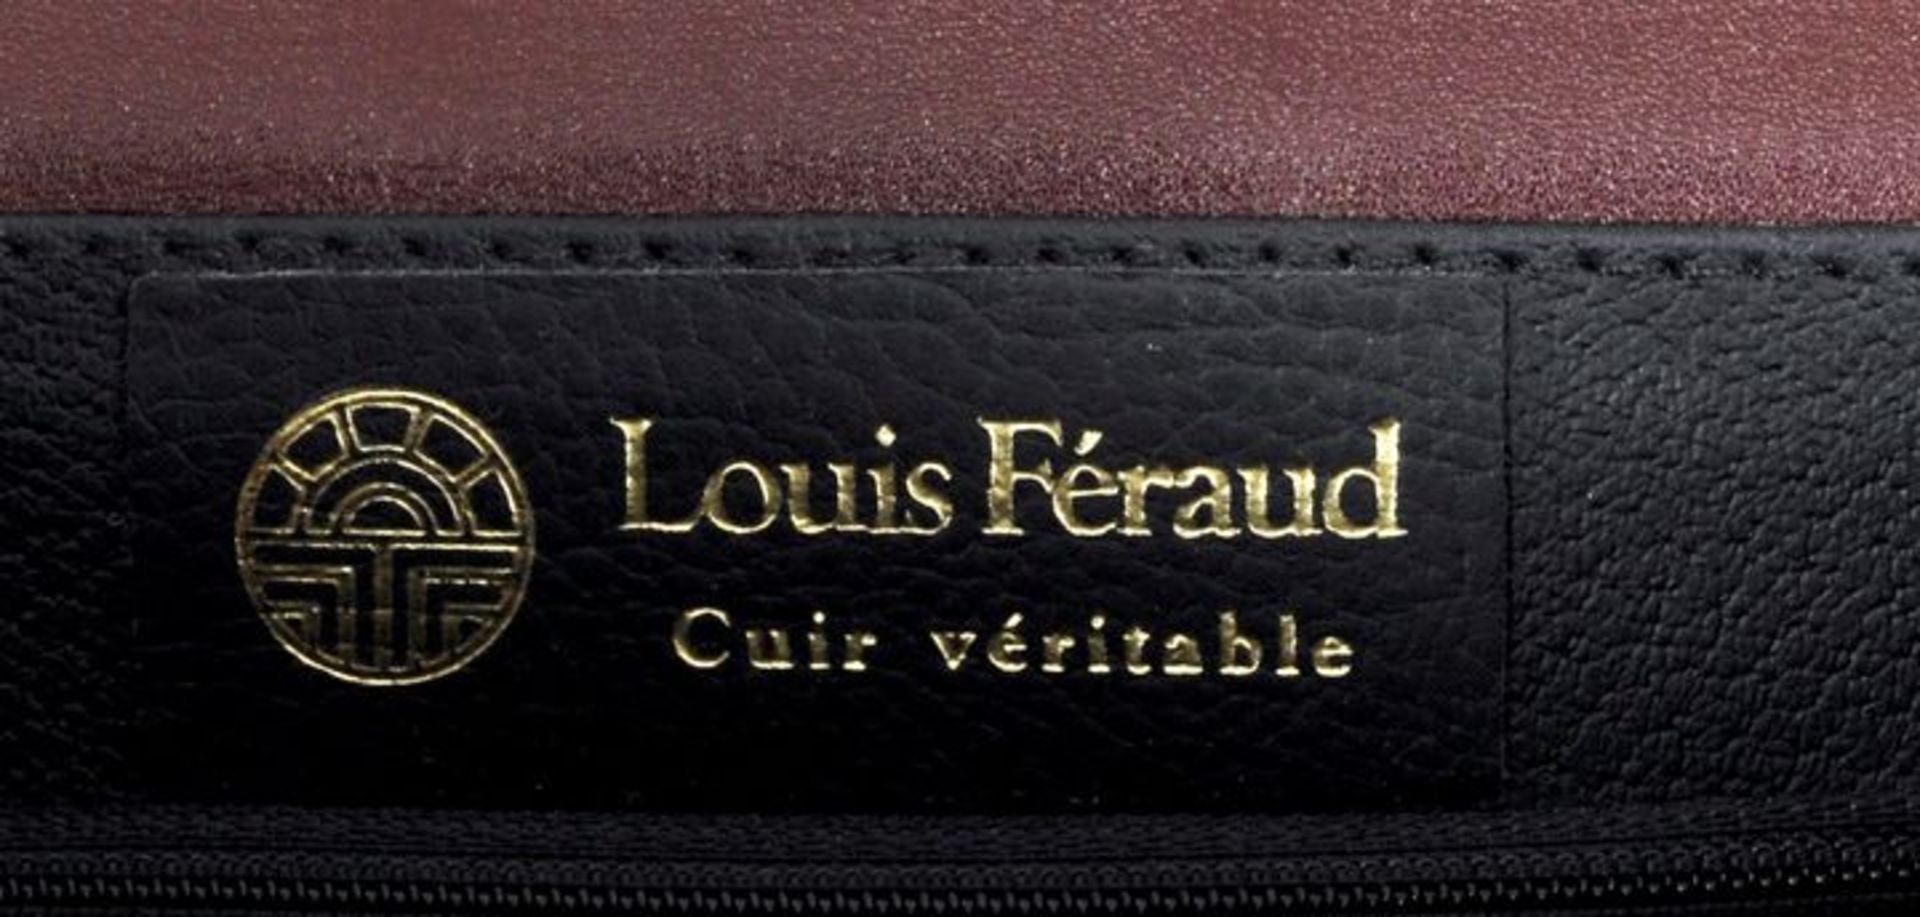 Louis Féraud - Image 2 of 2